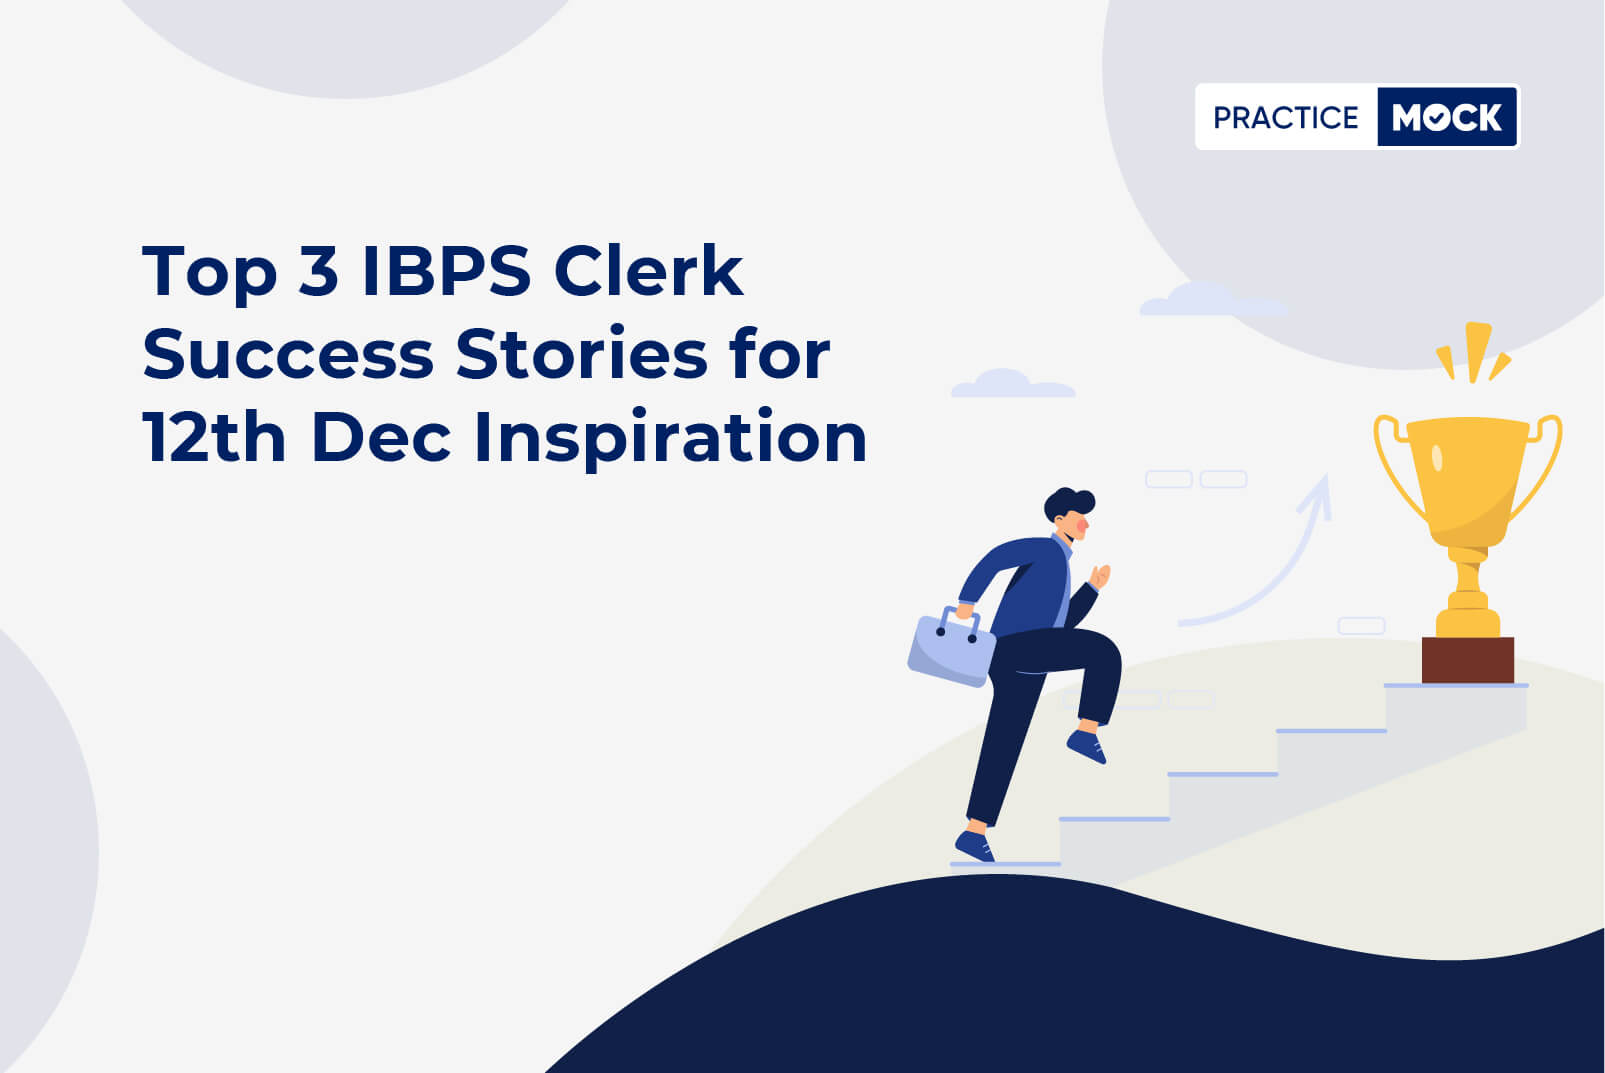 Top 3 IBPS Clerk Success Stories for 12th Dec Inspiration